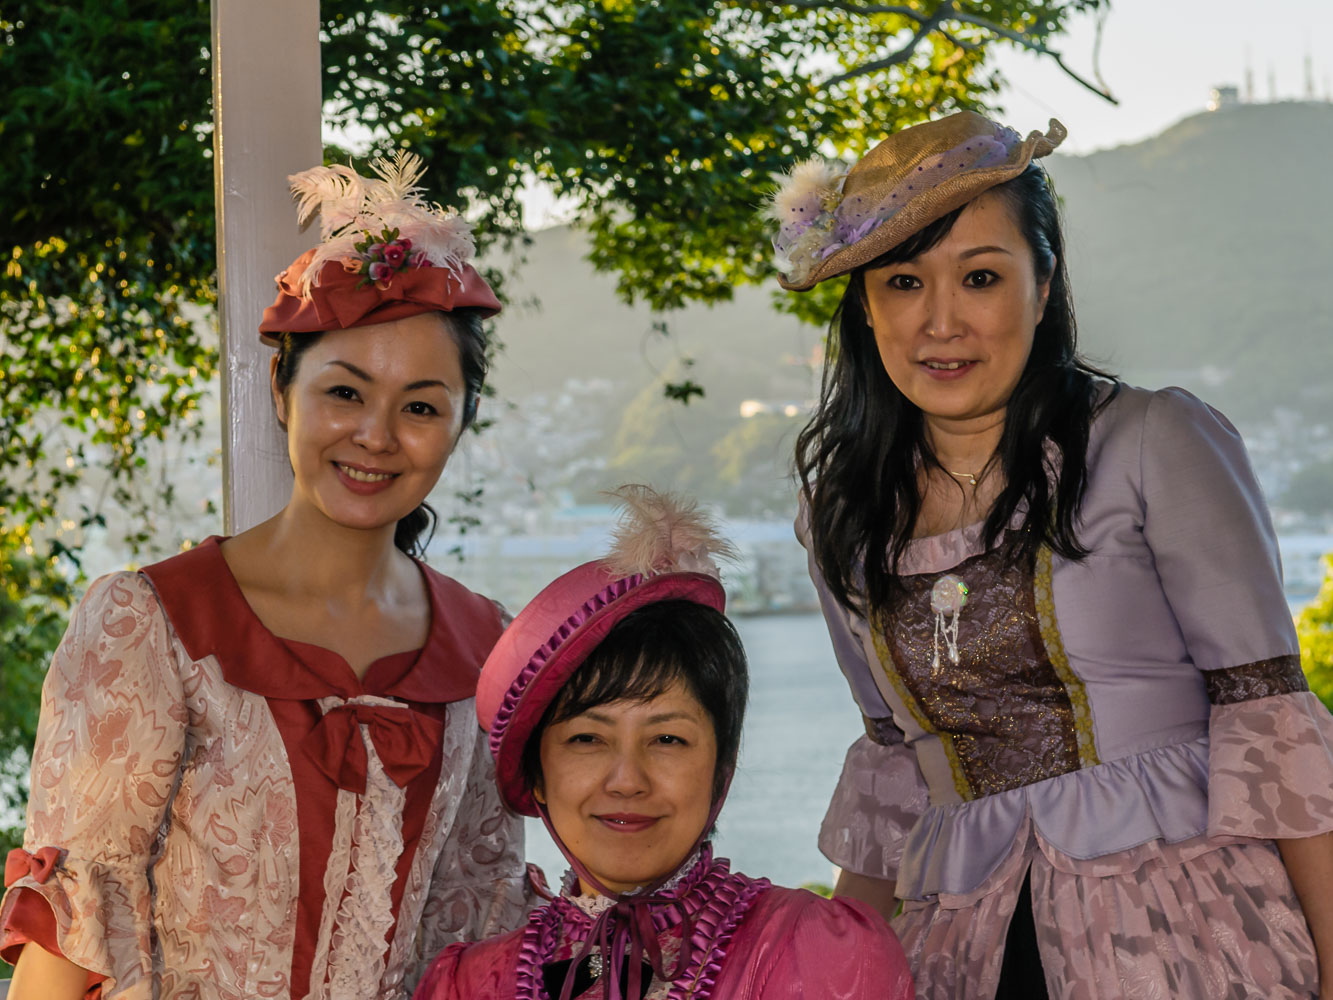 JA081286-Nagasaki-ladies-in-historic-dress.jpg